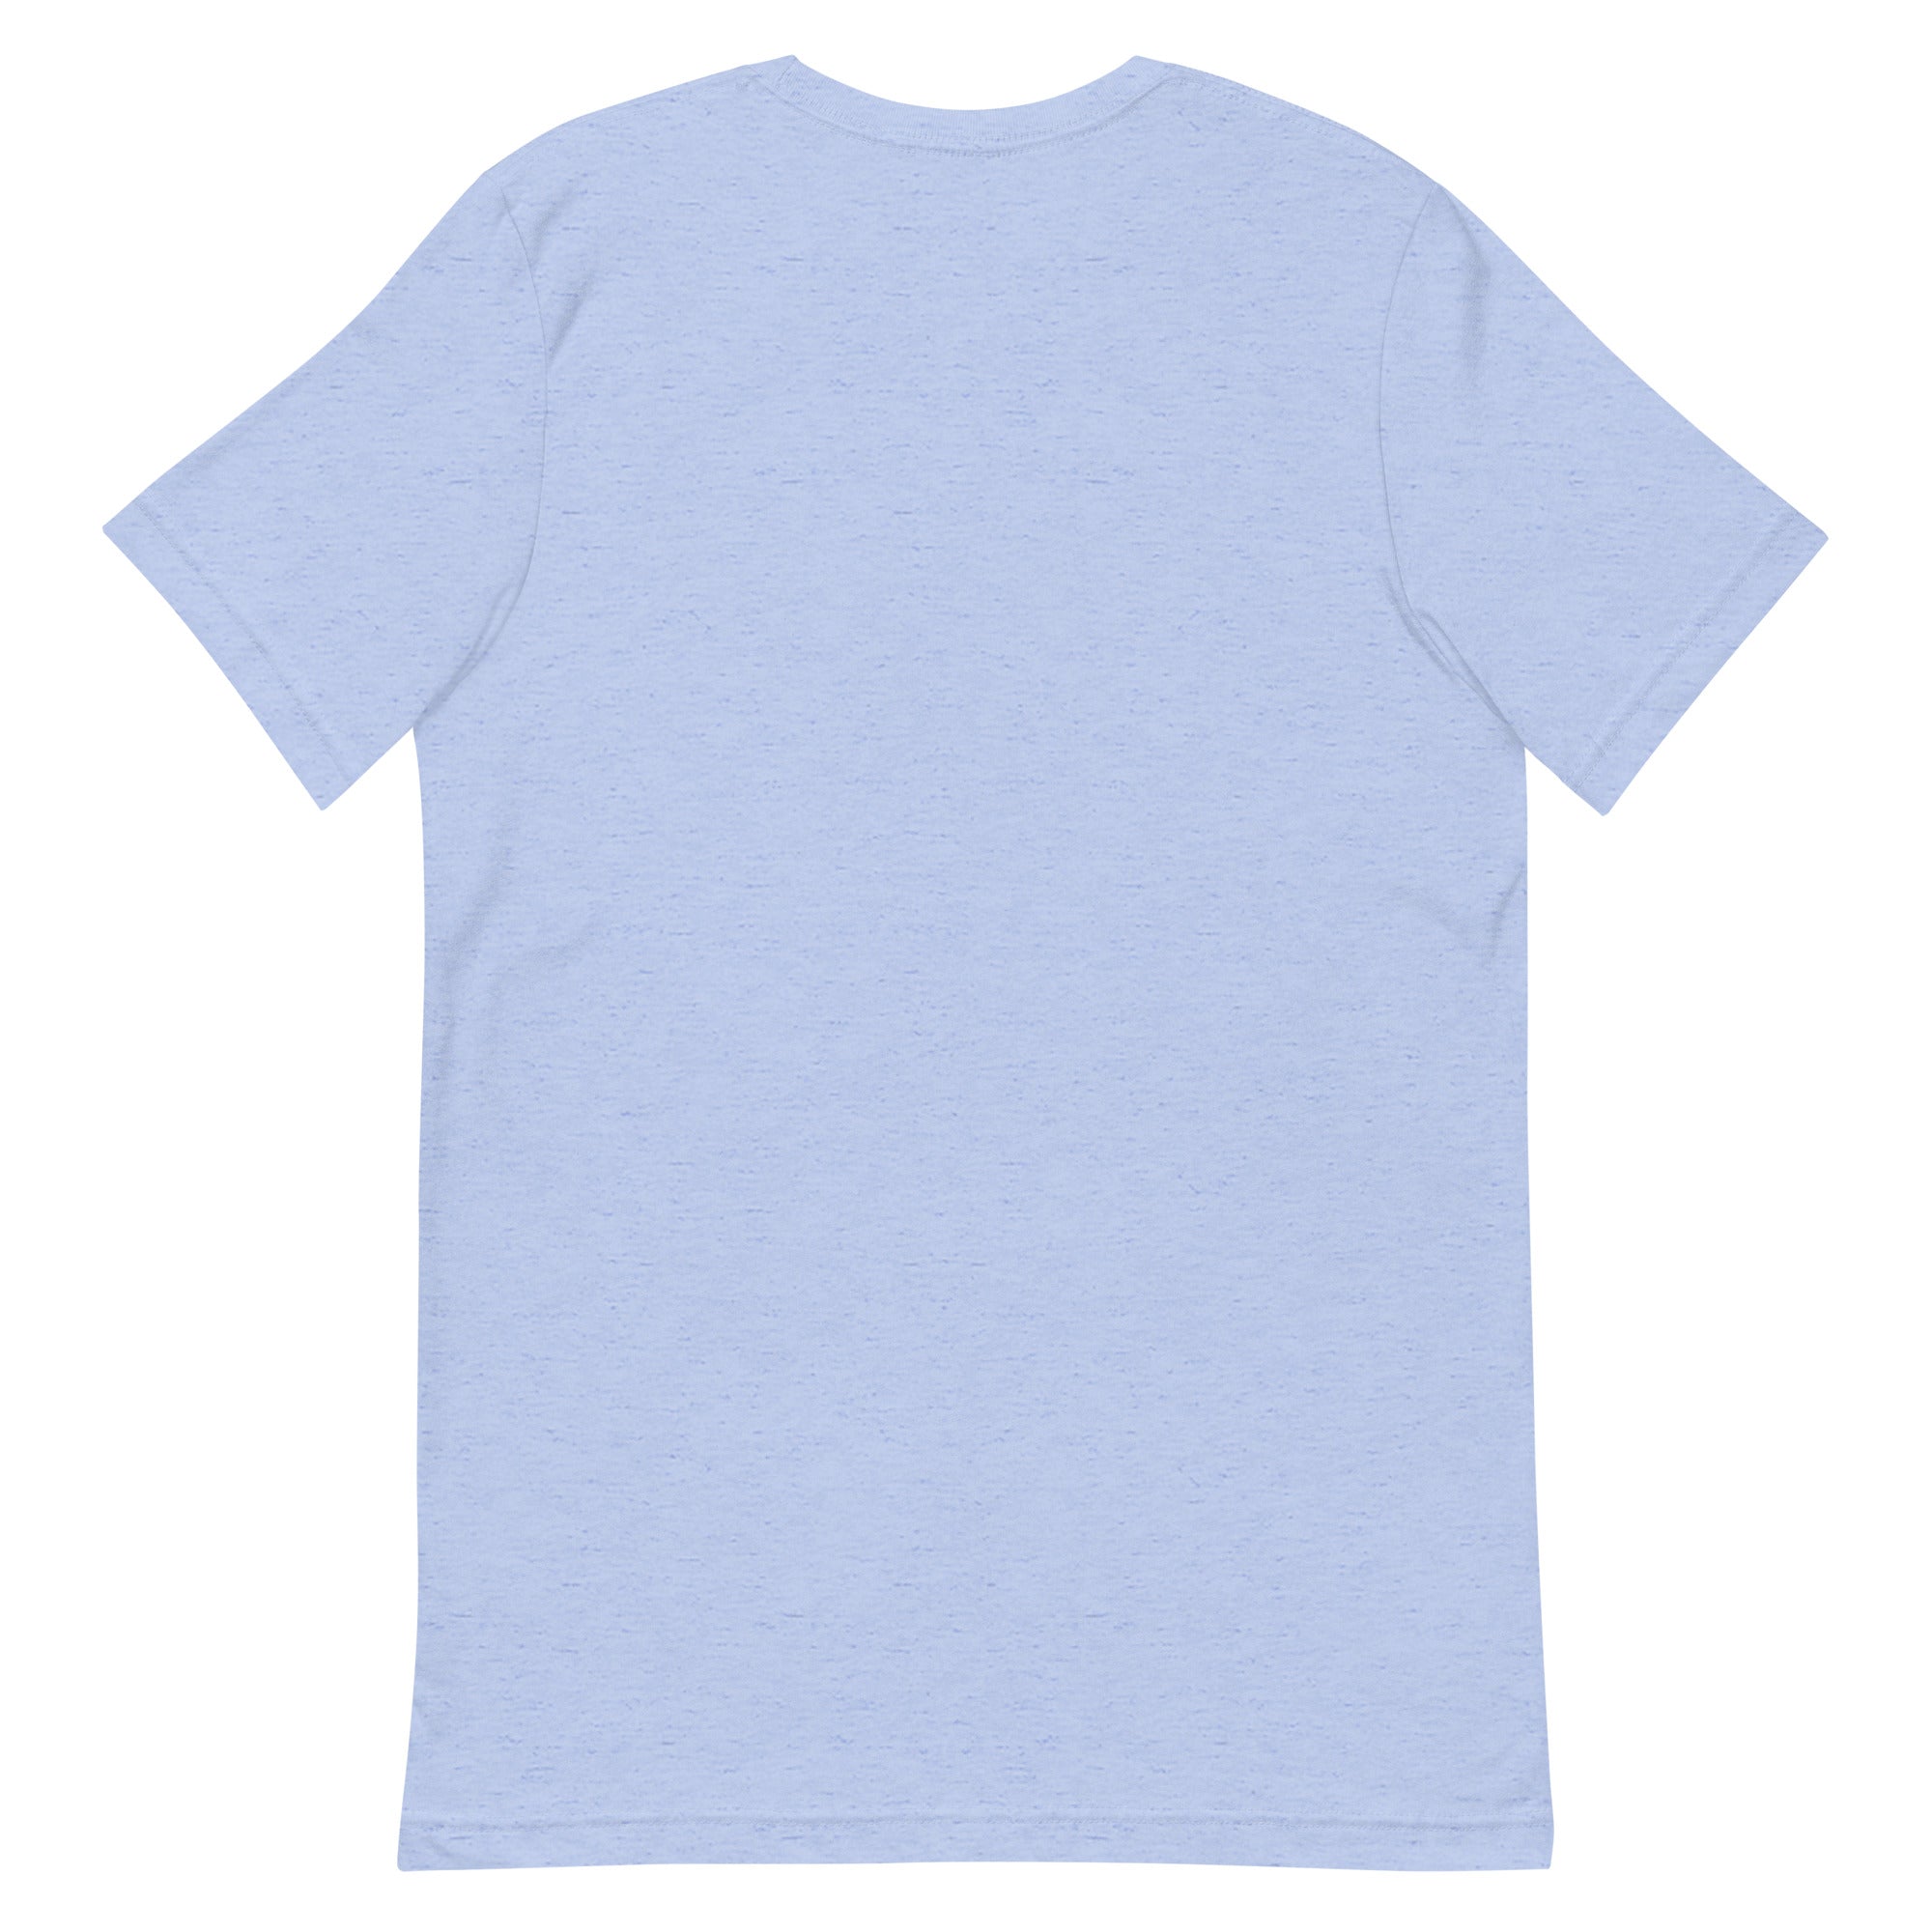 Not Salty "Bearings" Men's/Unisex T-Shirt